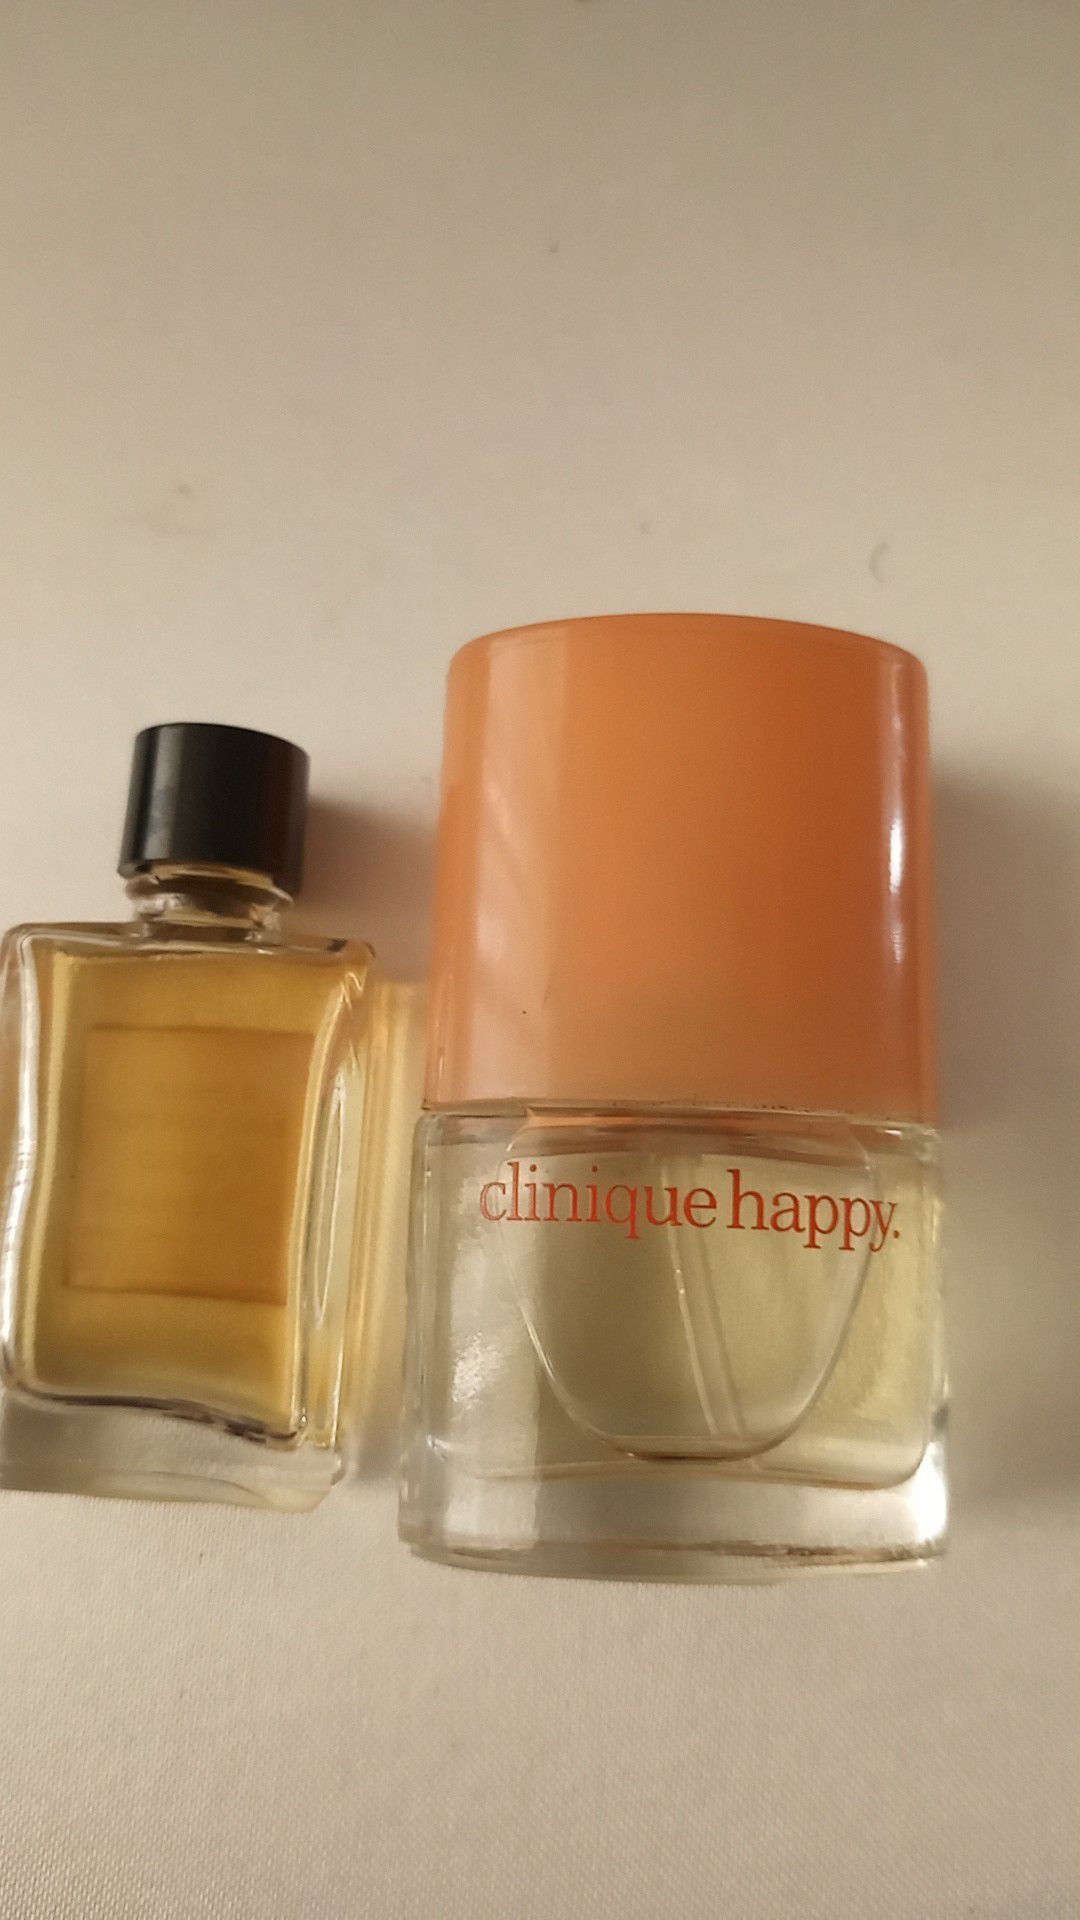 Mini coco Chanel perfume and clinic perfume